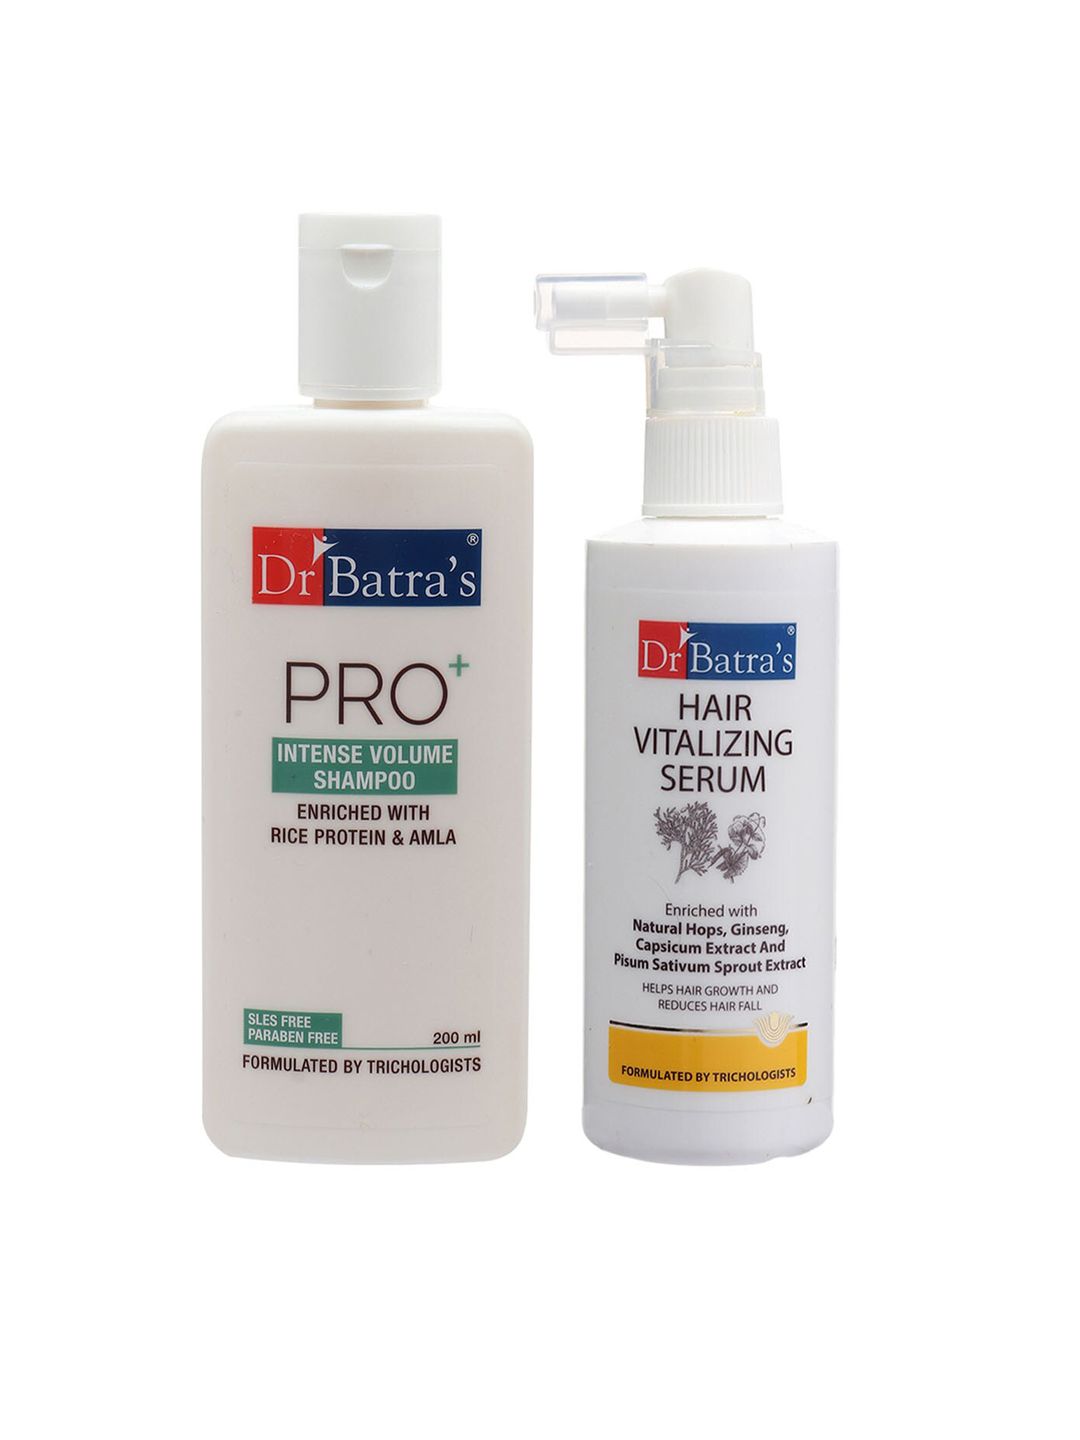 Dr Batra's Set Of Hair Vitalizing Serum & Pro+ Intense Volume Shampoo Price in India